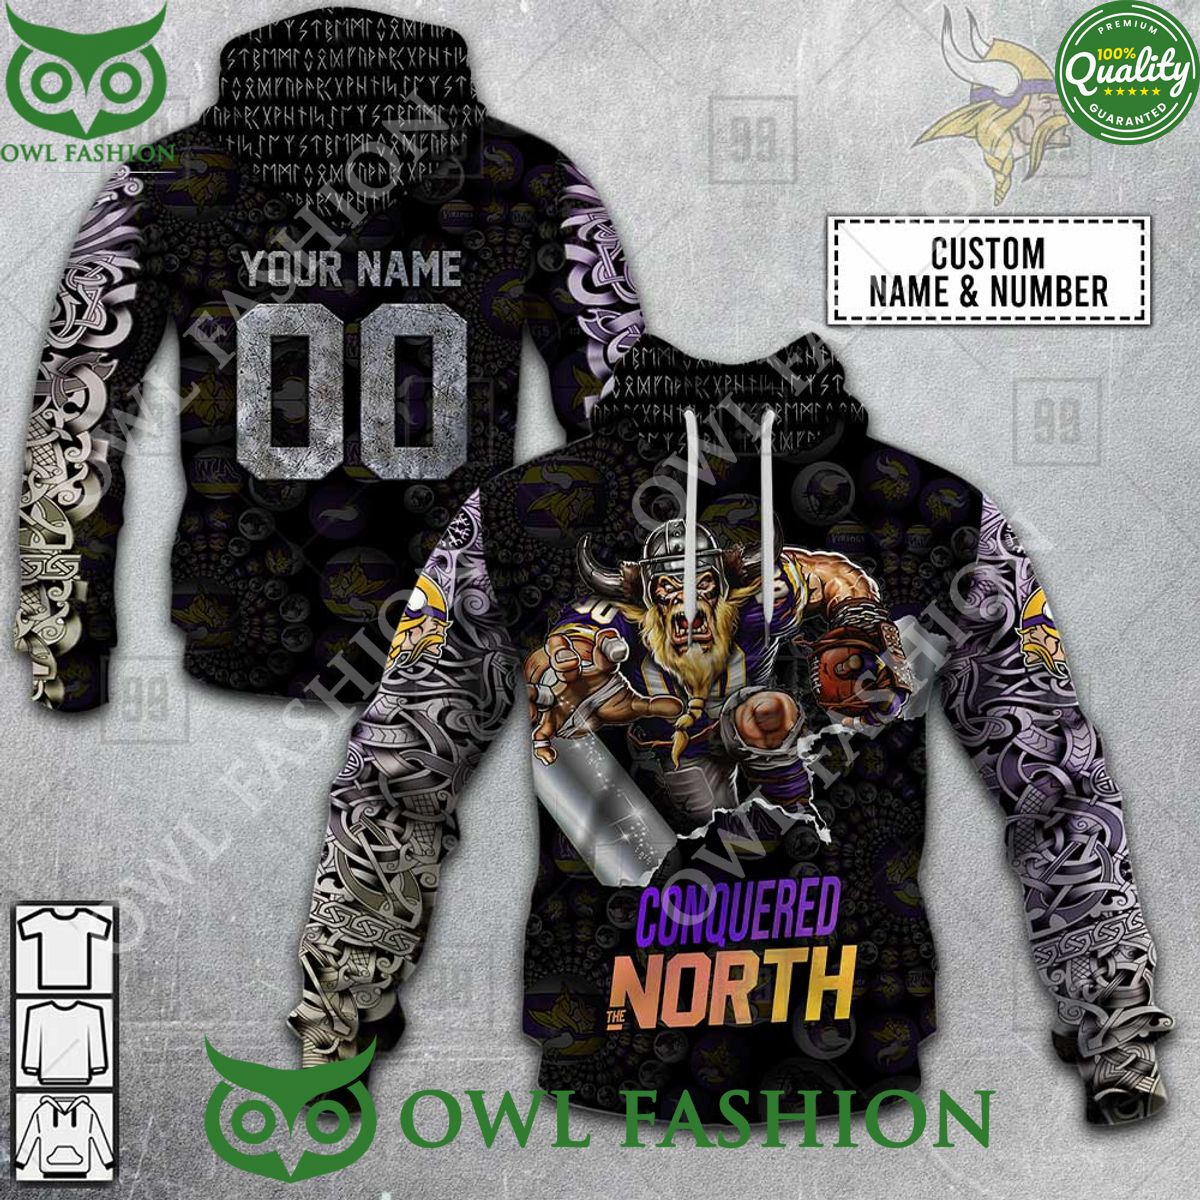 personalized nfl minnesota vikings conquered north vikings pattern 3d hoodie 1 opimm.jpg